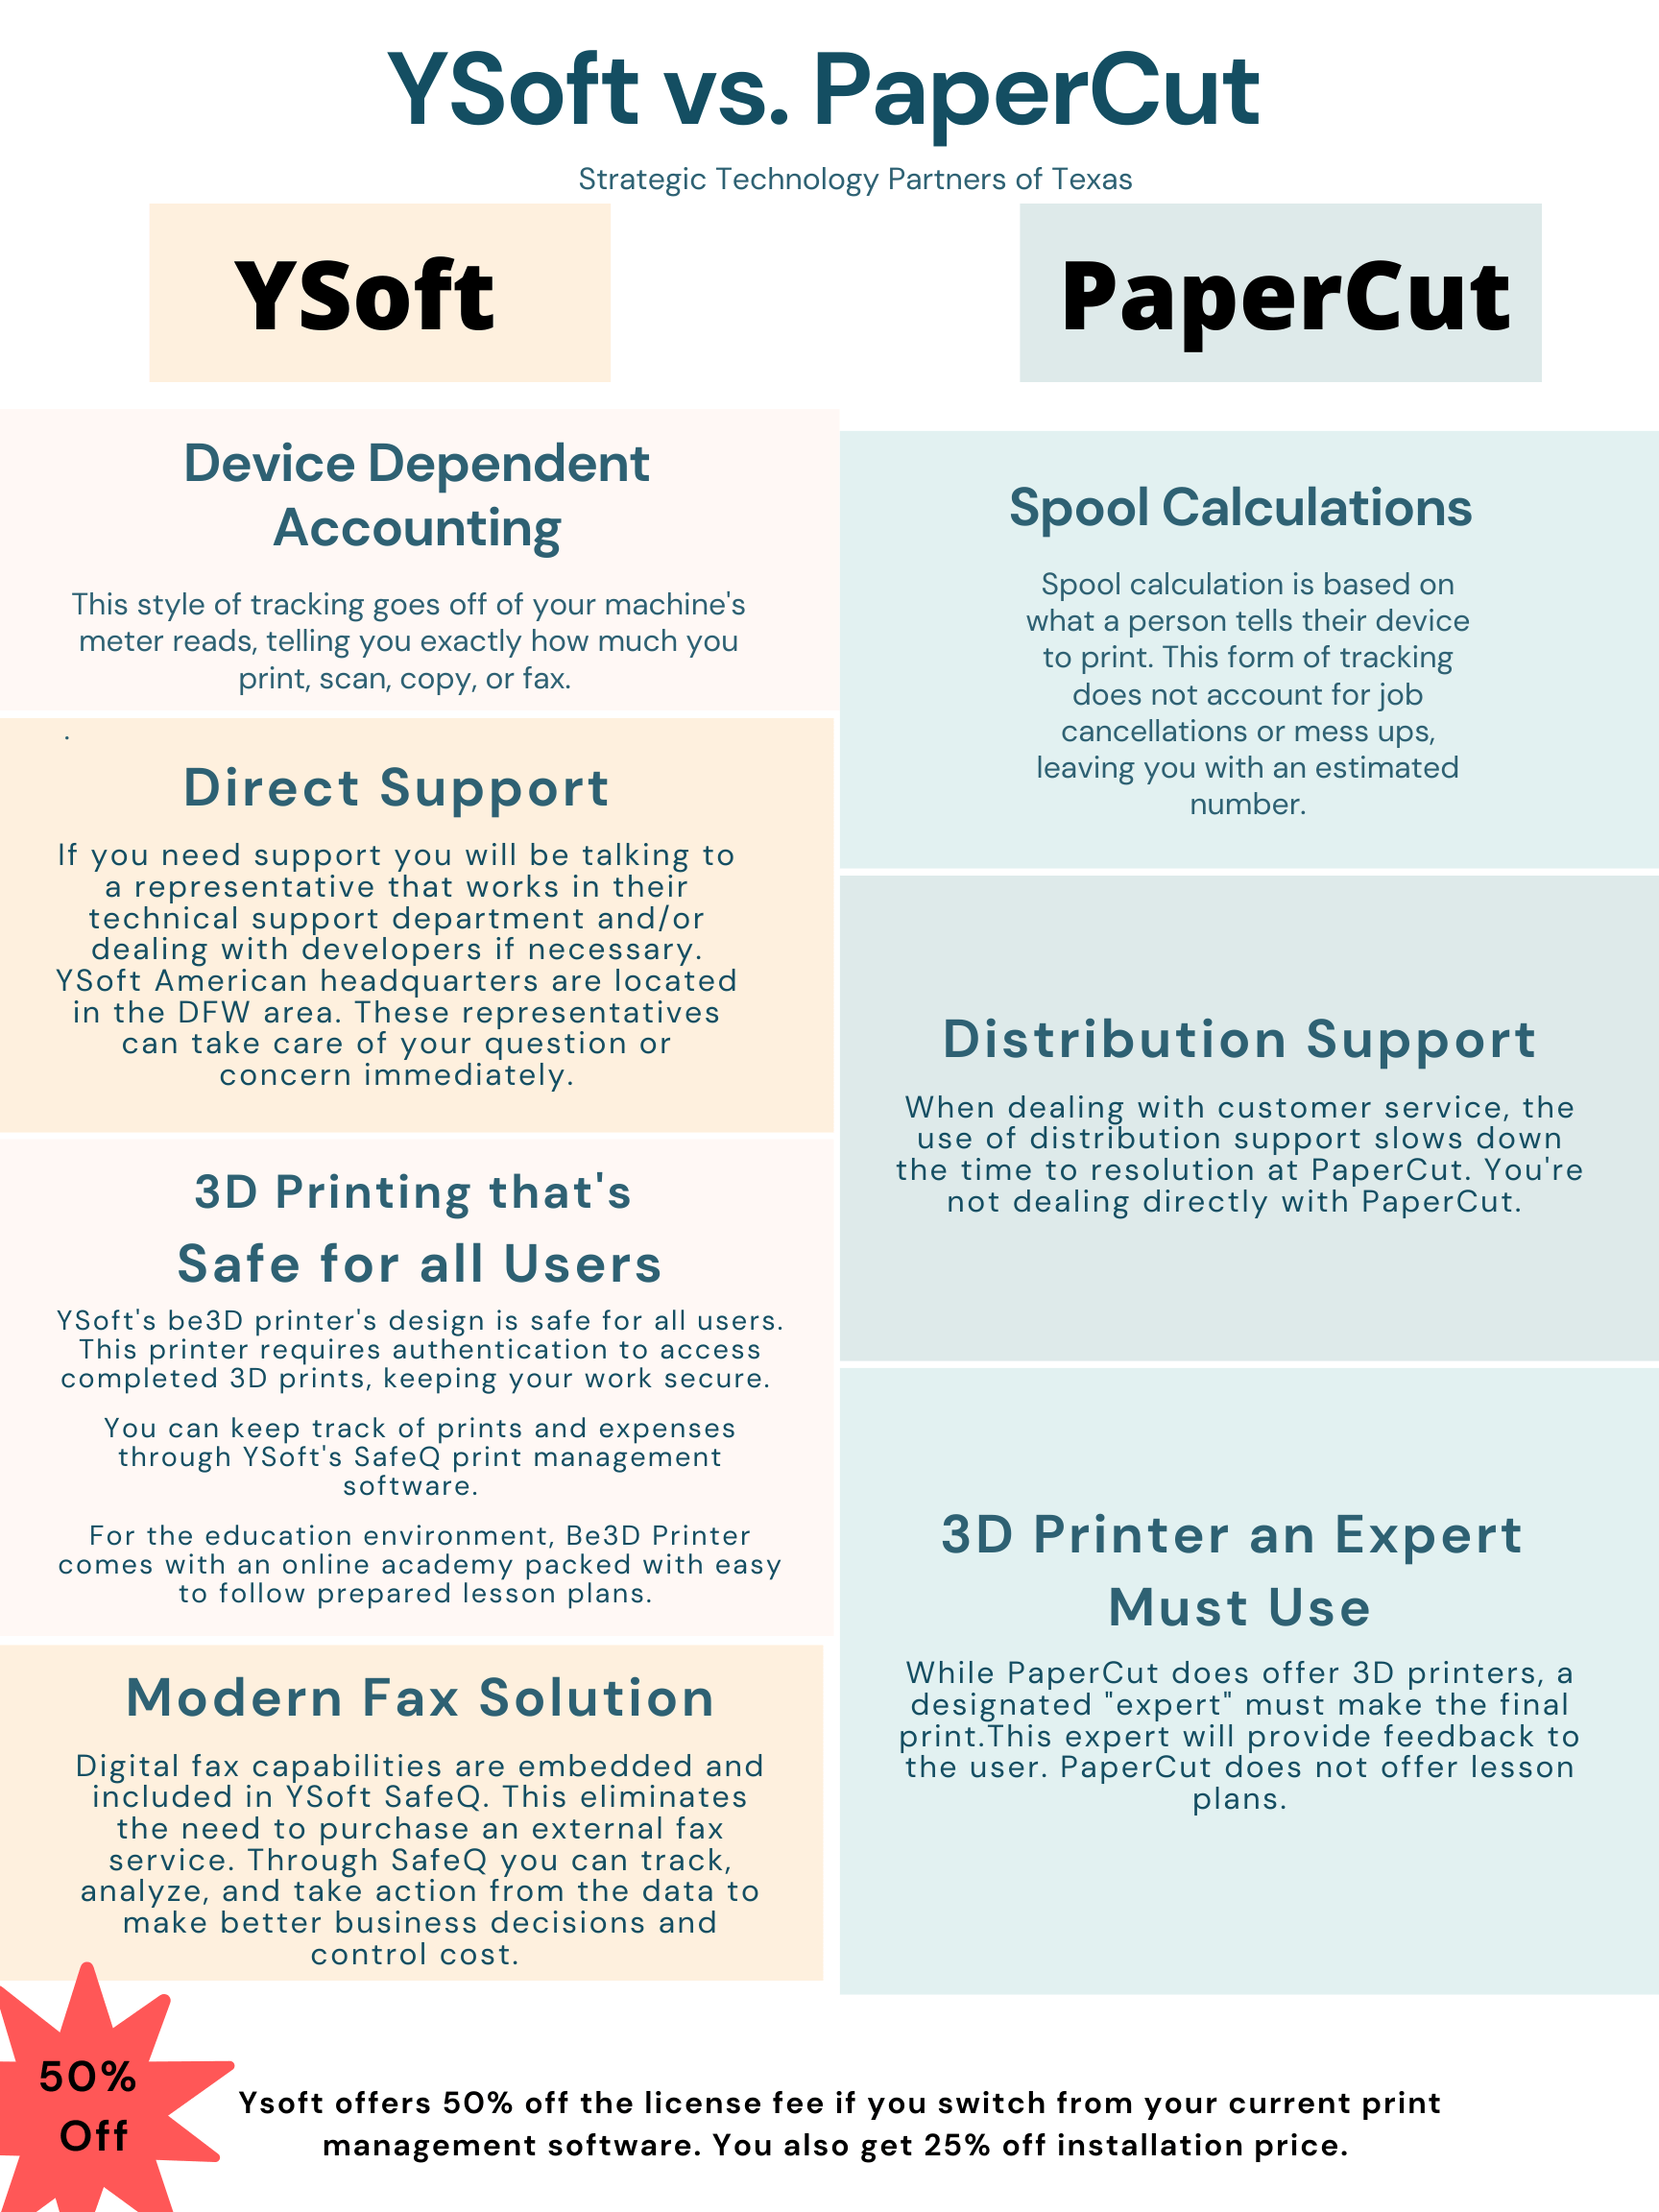 Y Soft vs. Paper Cut infographic